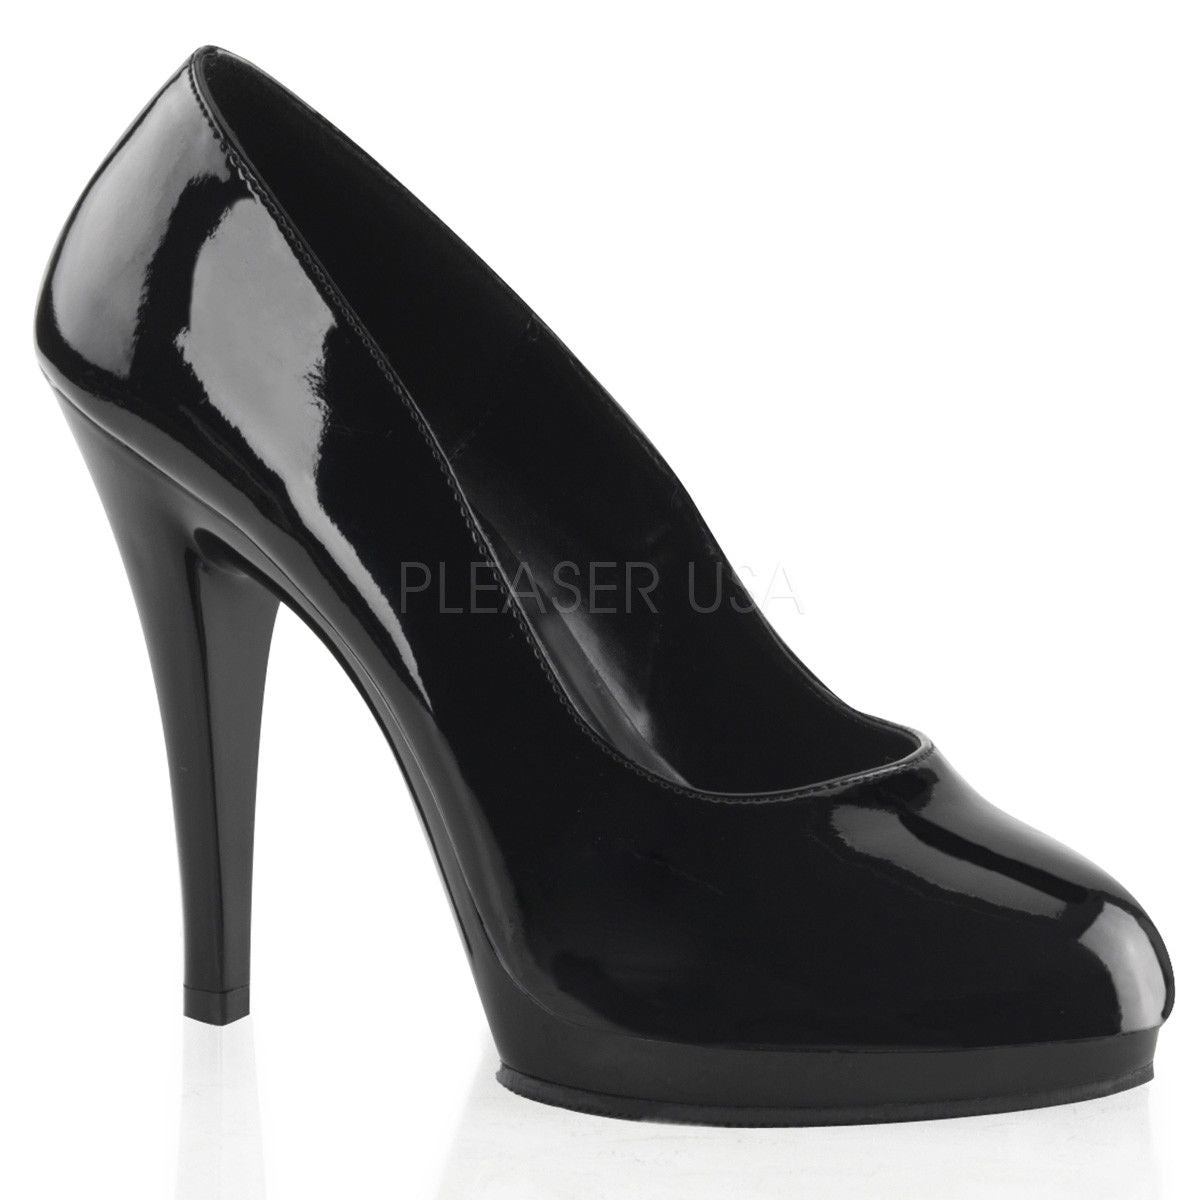 påske Grunde En begivenhed Buy Women's High Heels Online in Australia - A Shoe Addiction - heels  fabulicious